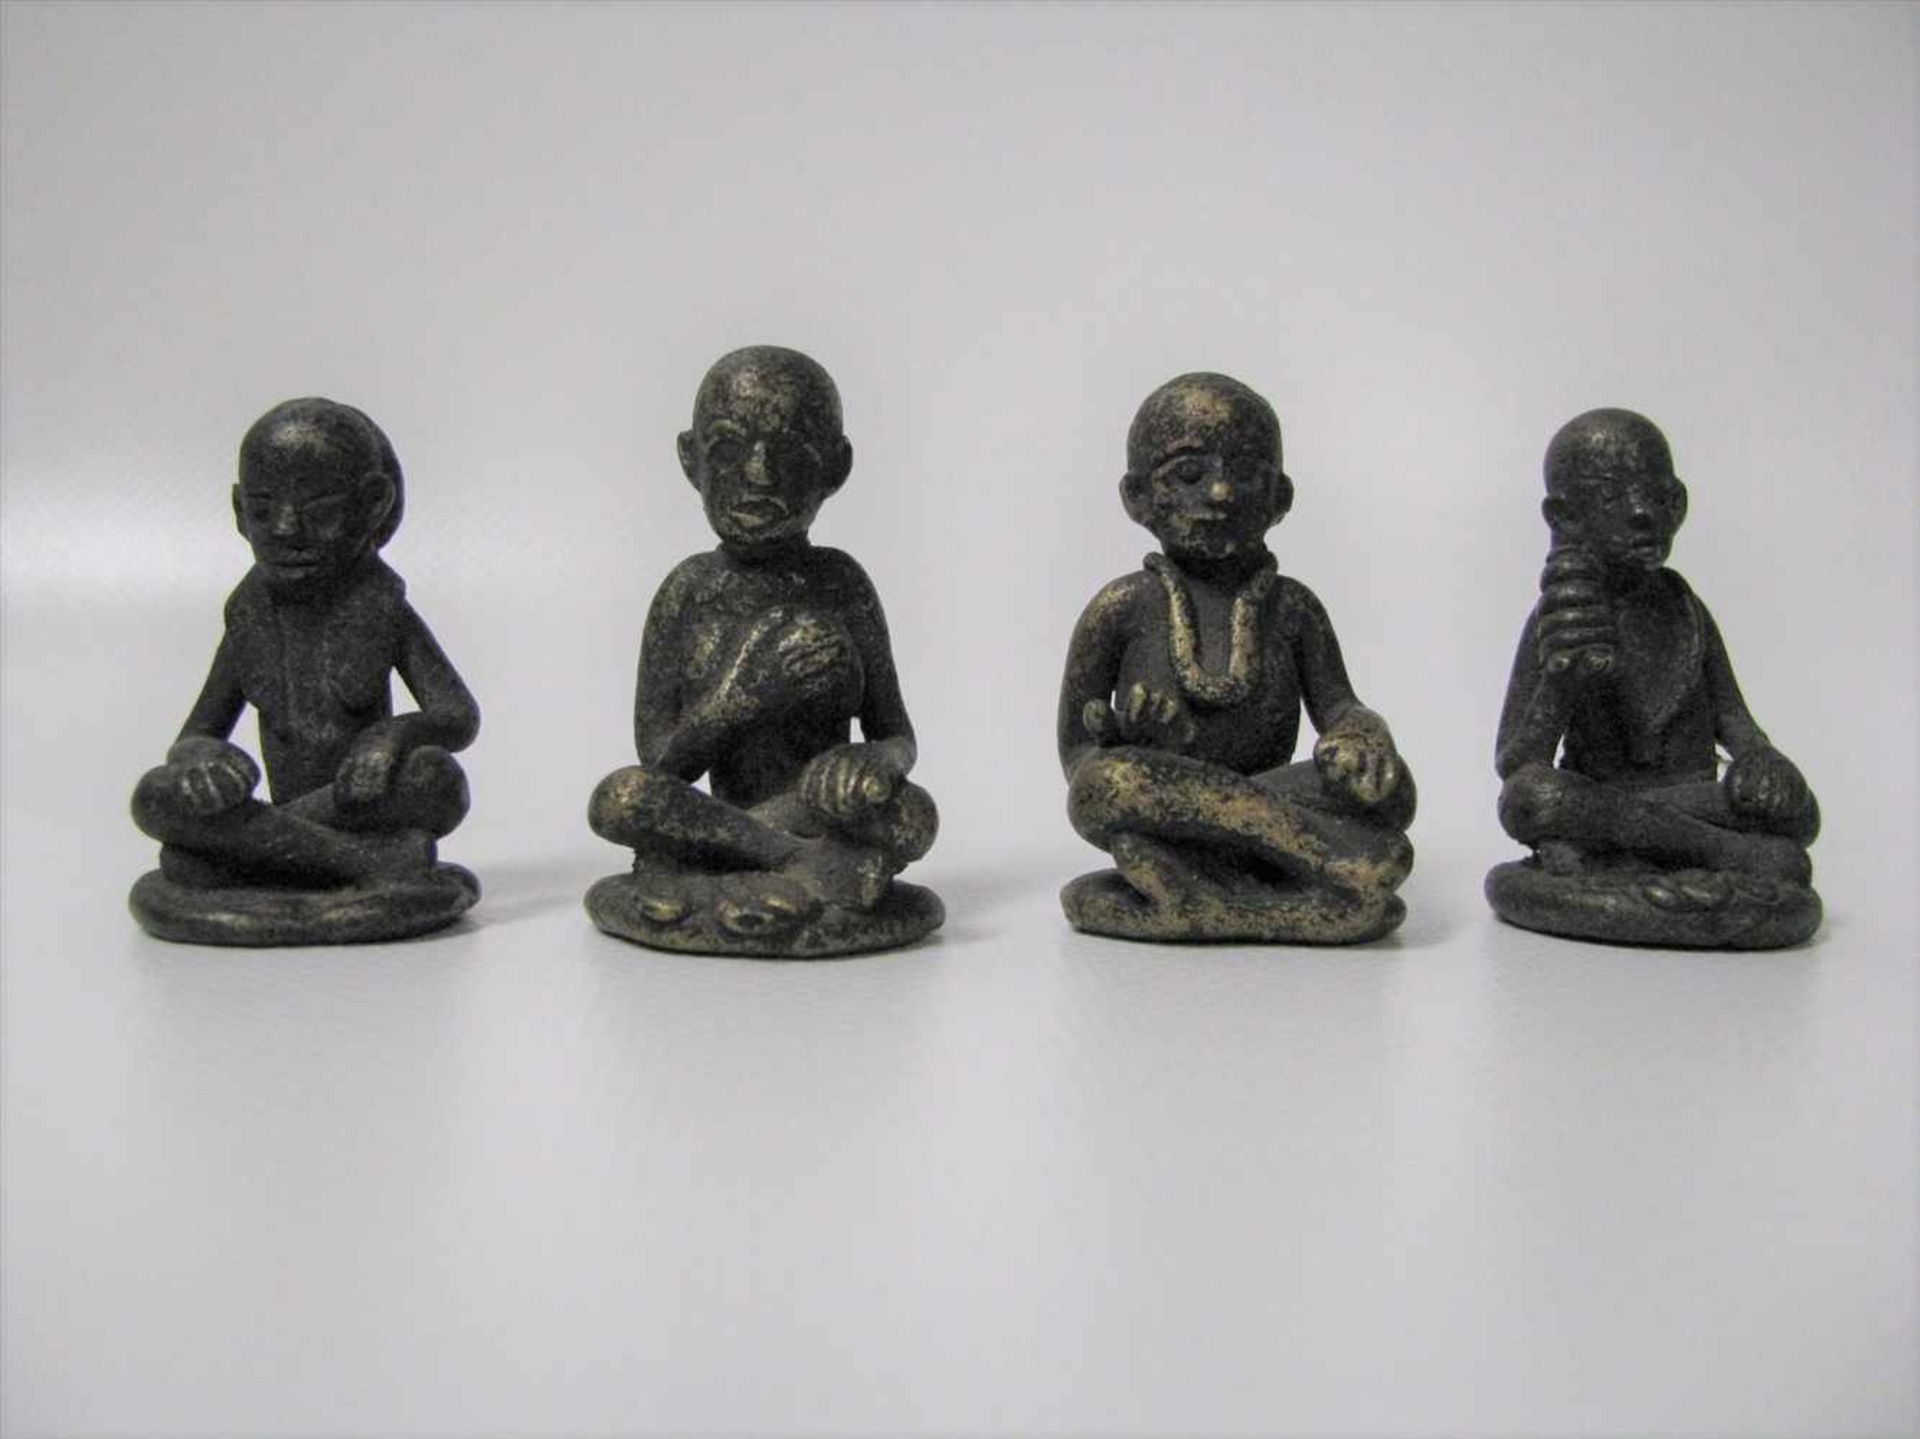 4 sitzende Mönche, Tibet/Nepal, um 1900, Bronze, h 4,5 cm, d 3 cm.